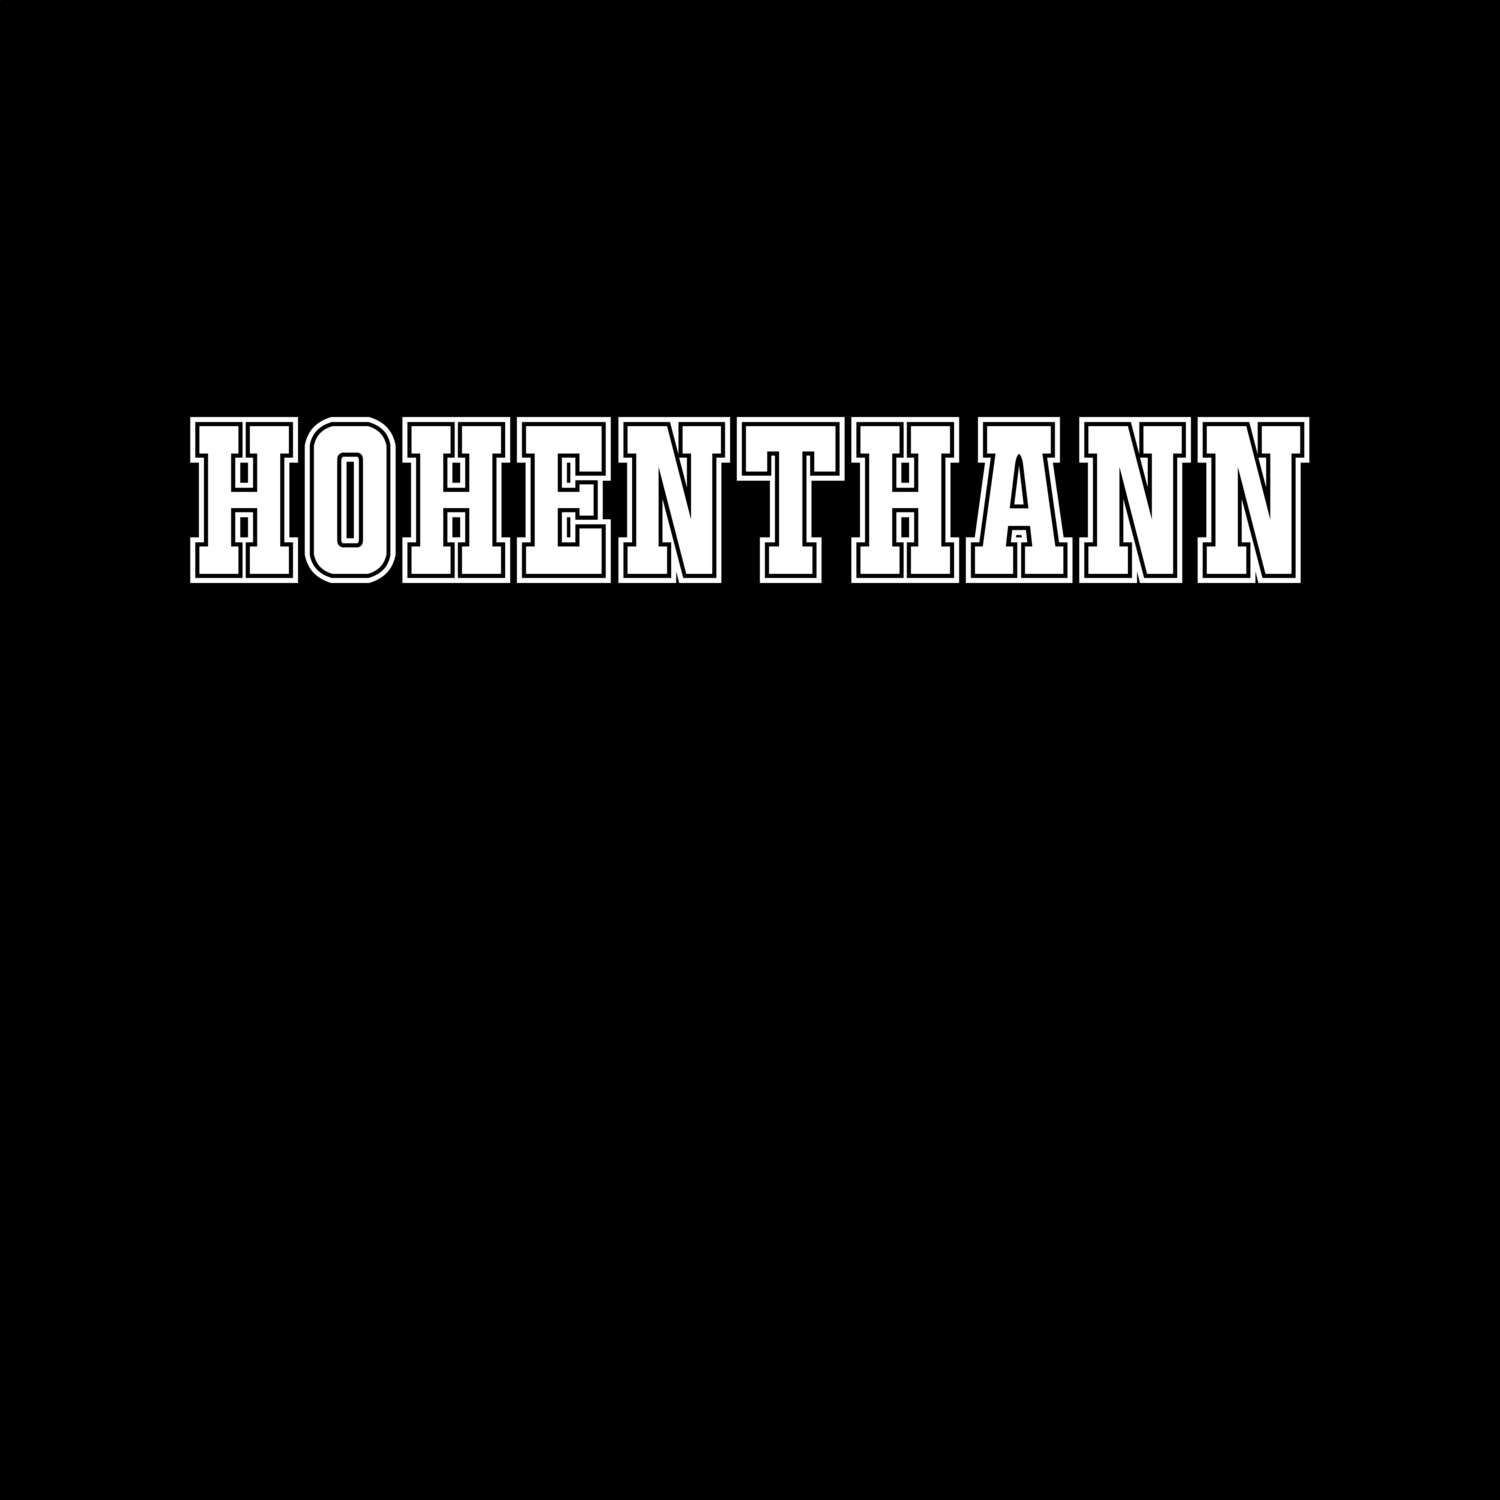 Hohenthann T-Shirt »Classic«